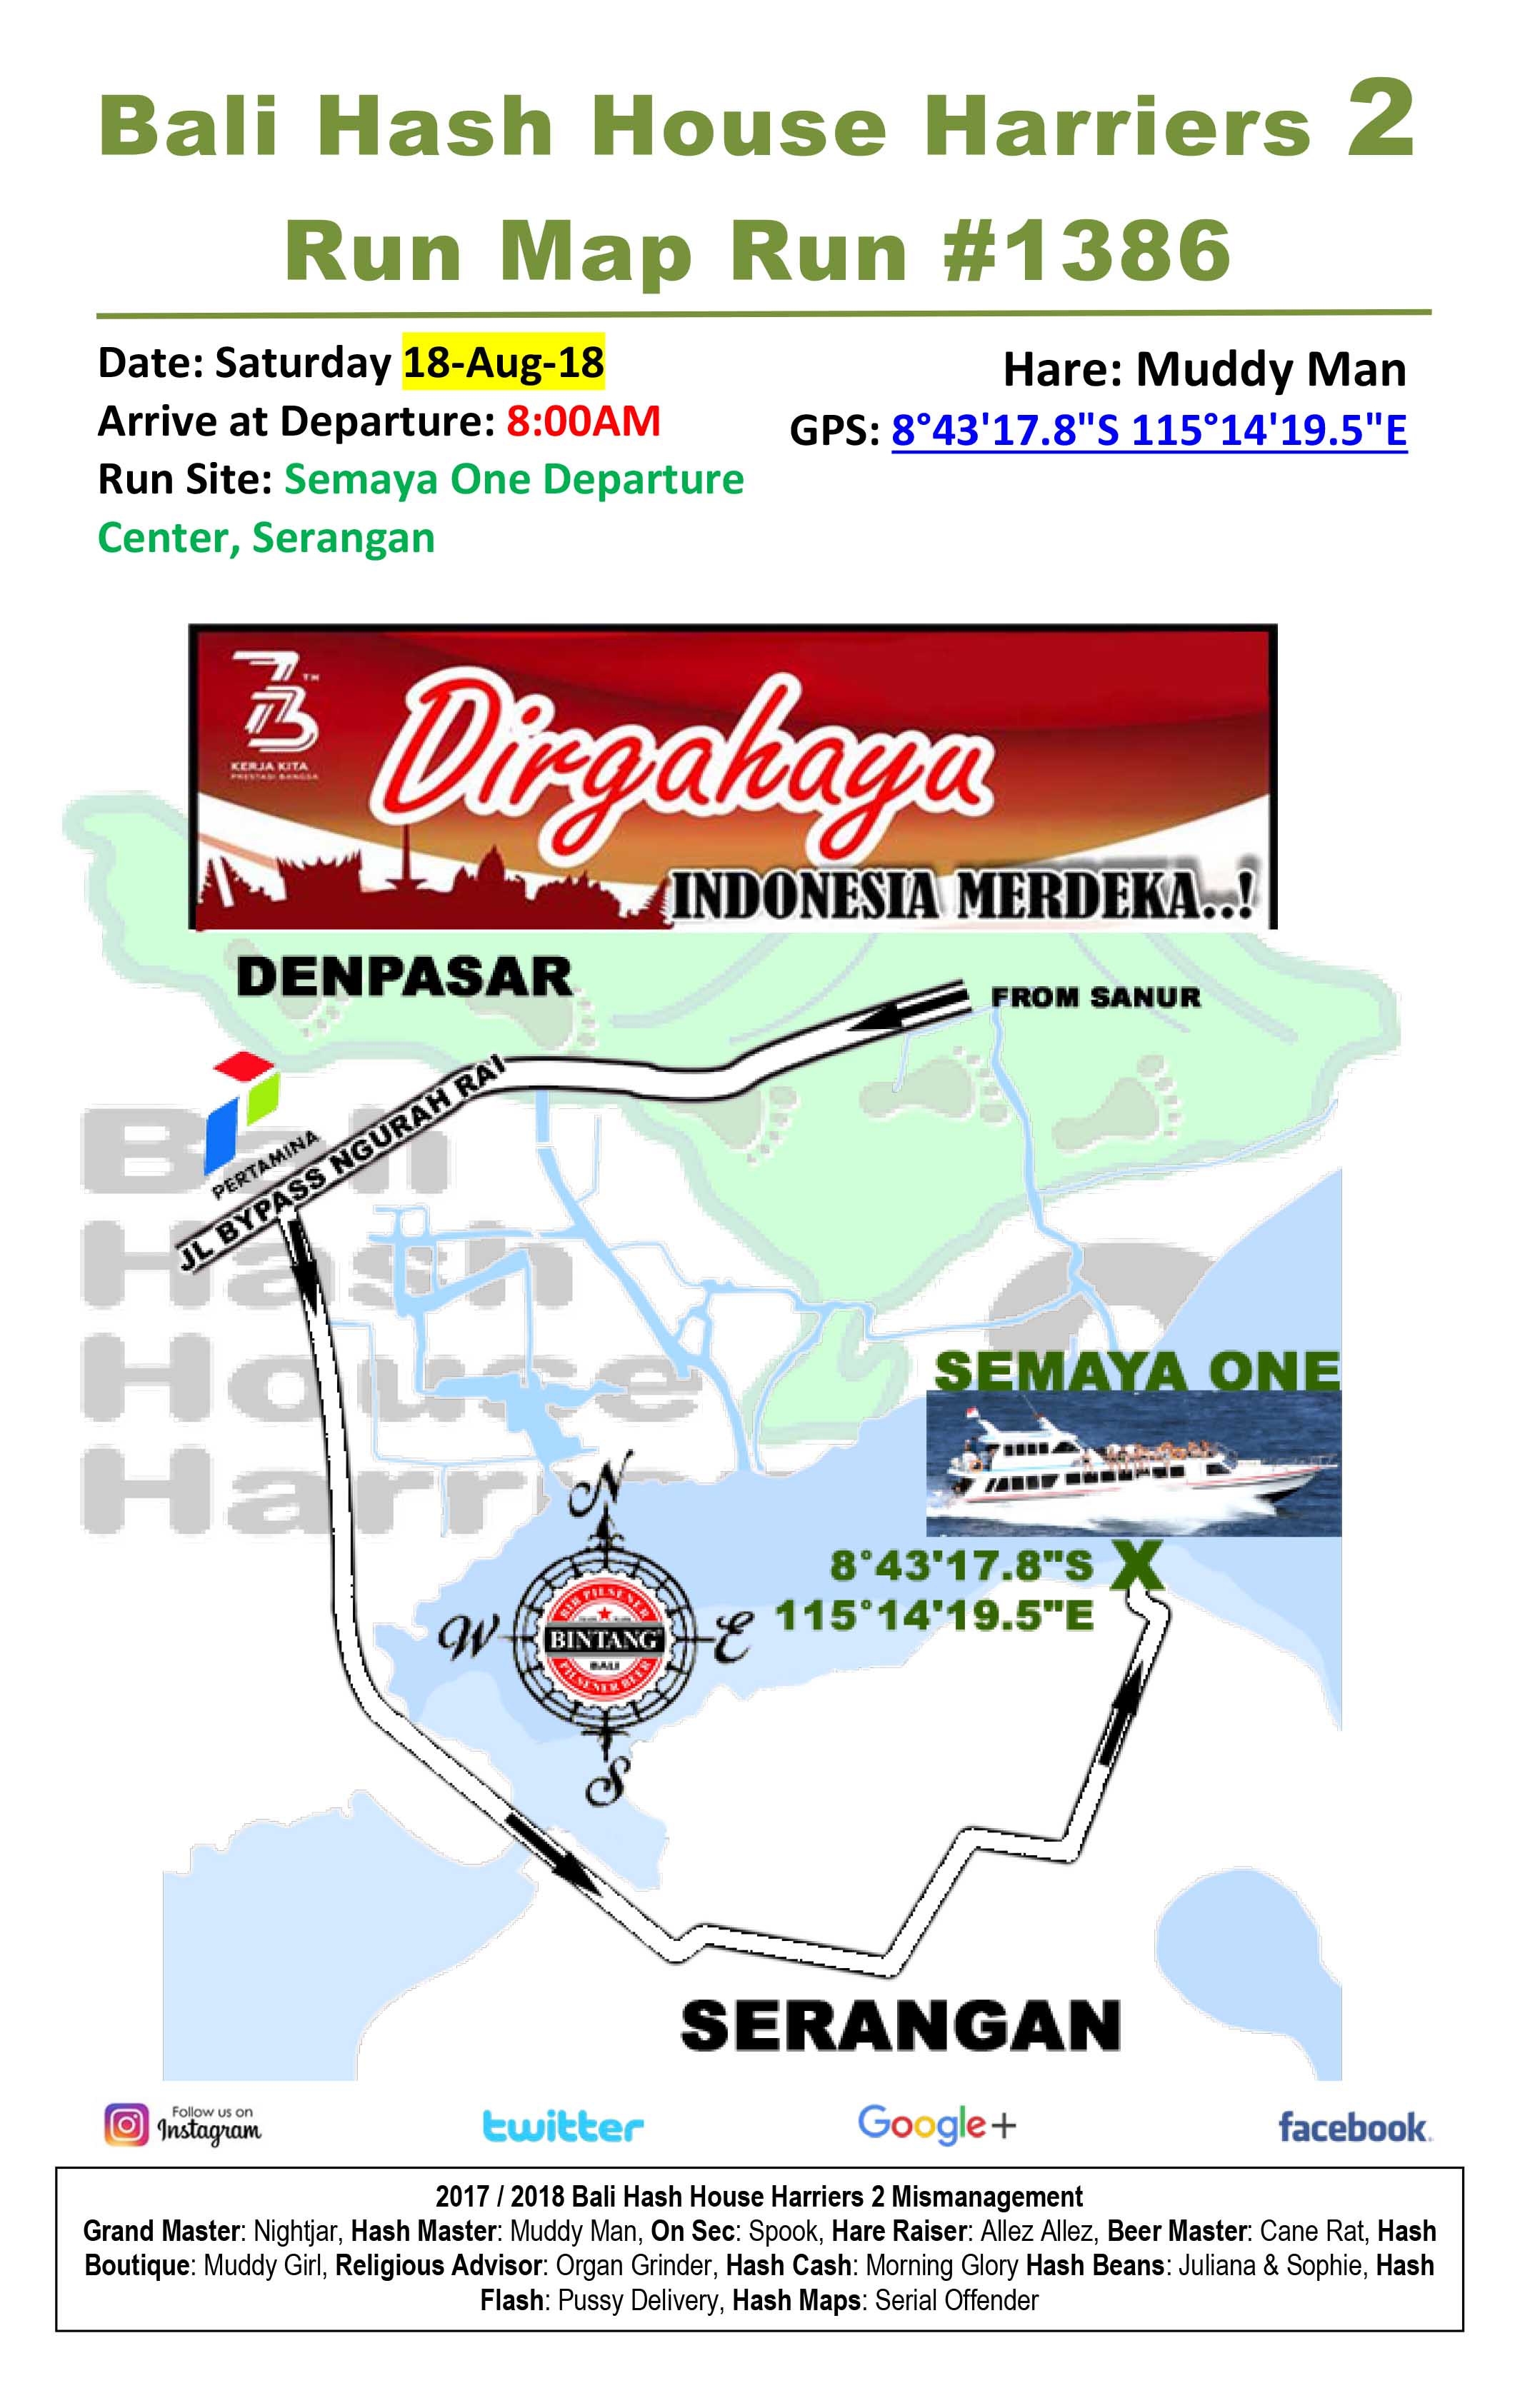 BHHH2 Run Map Run #1386 Merdeka Run Nusa Penida 18-Aug-18